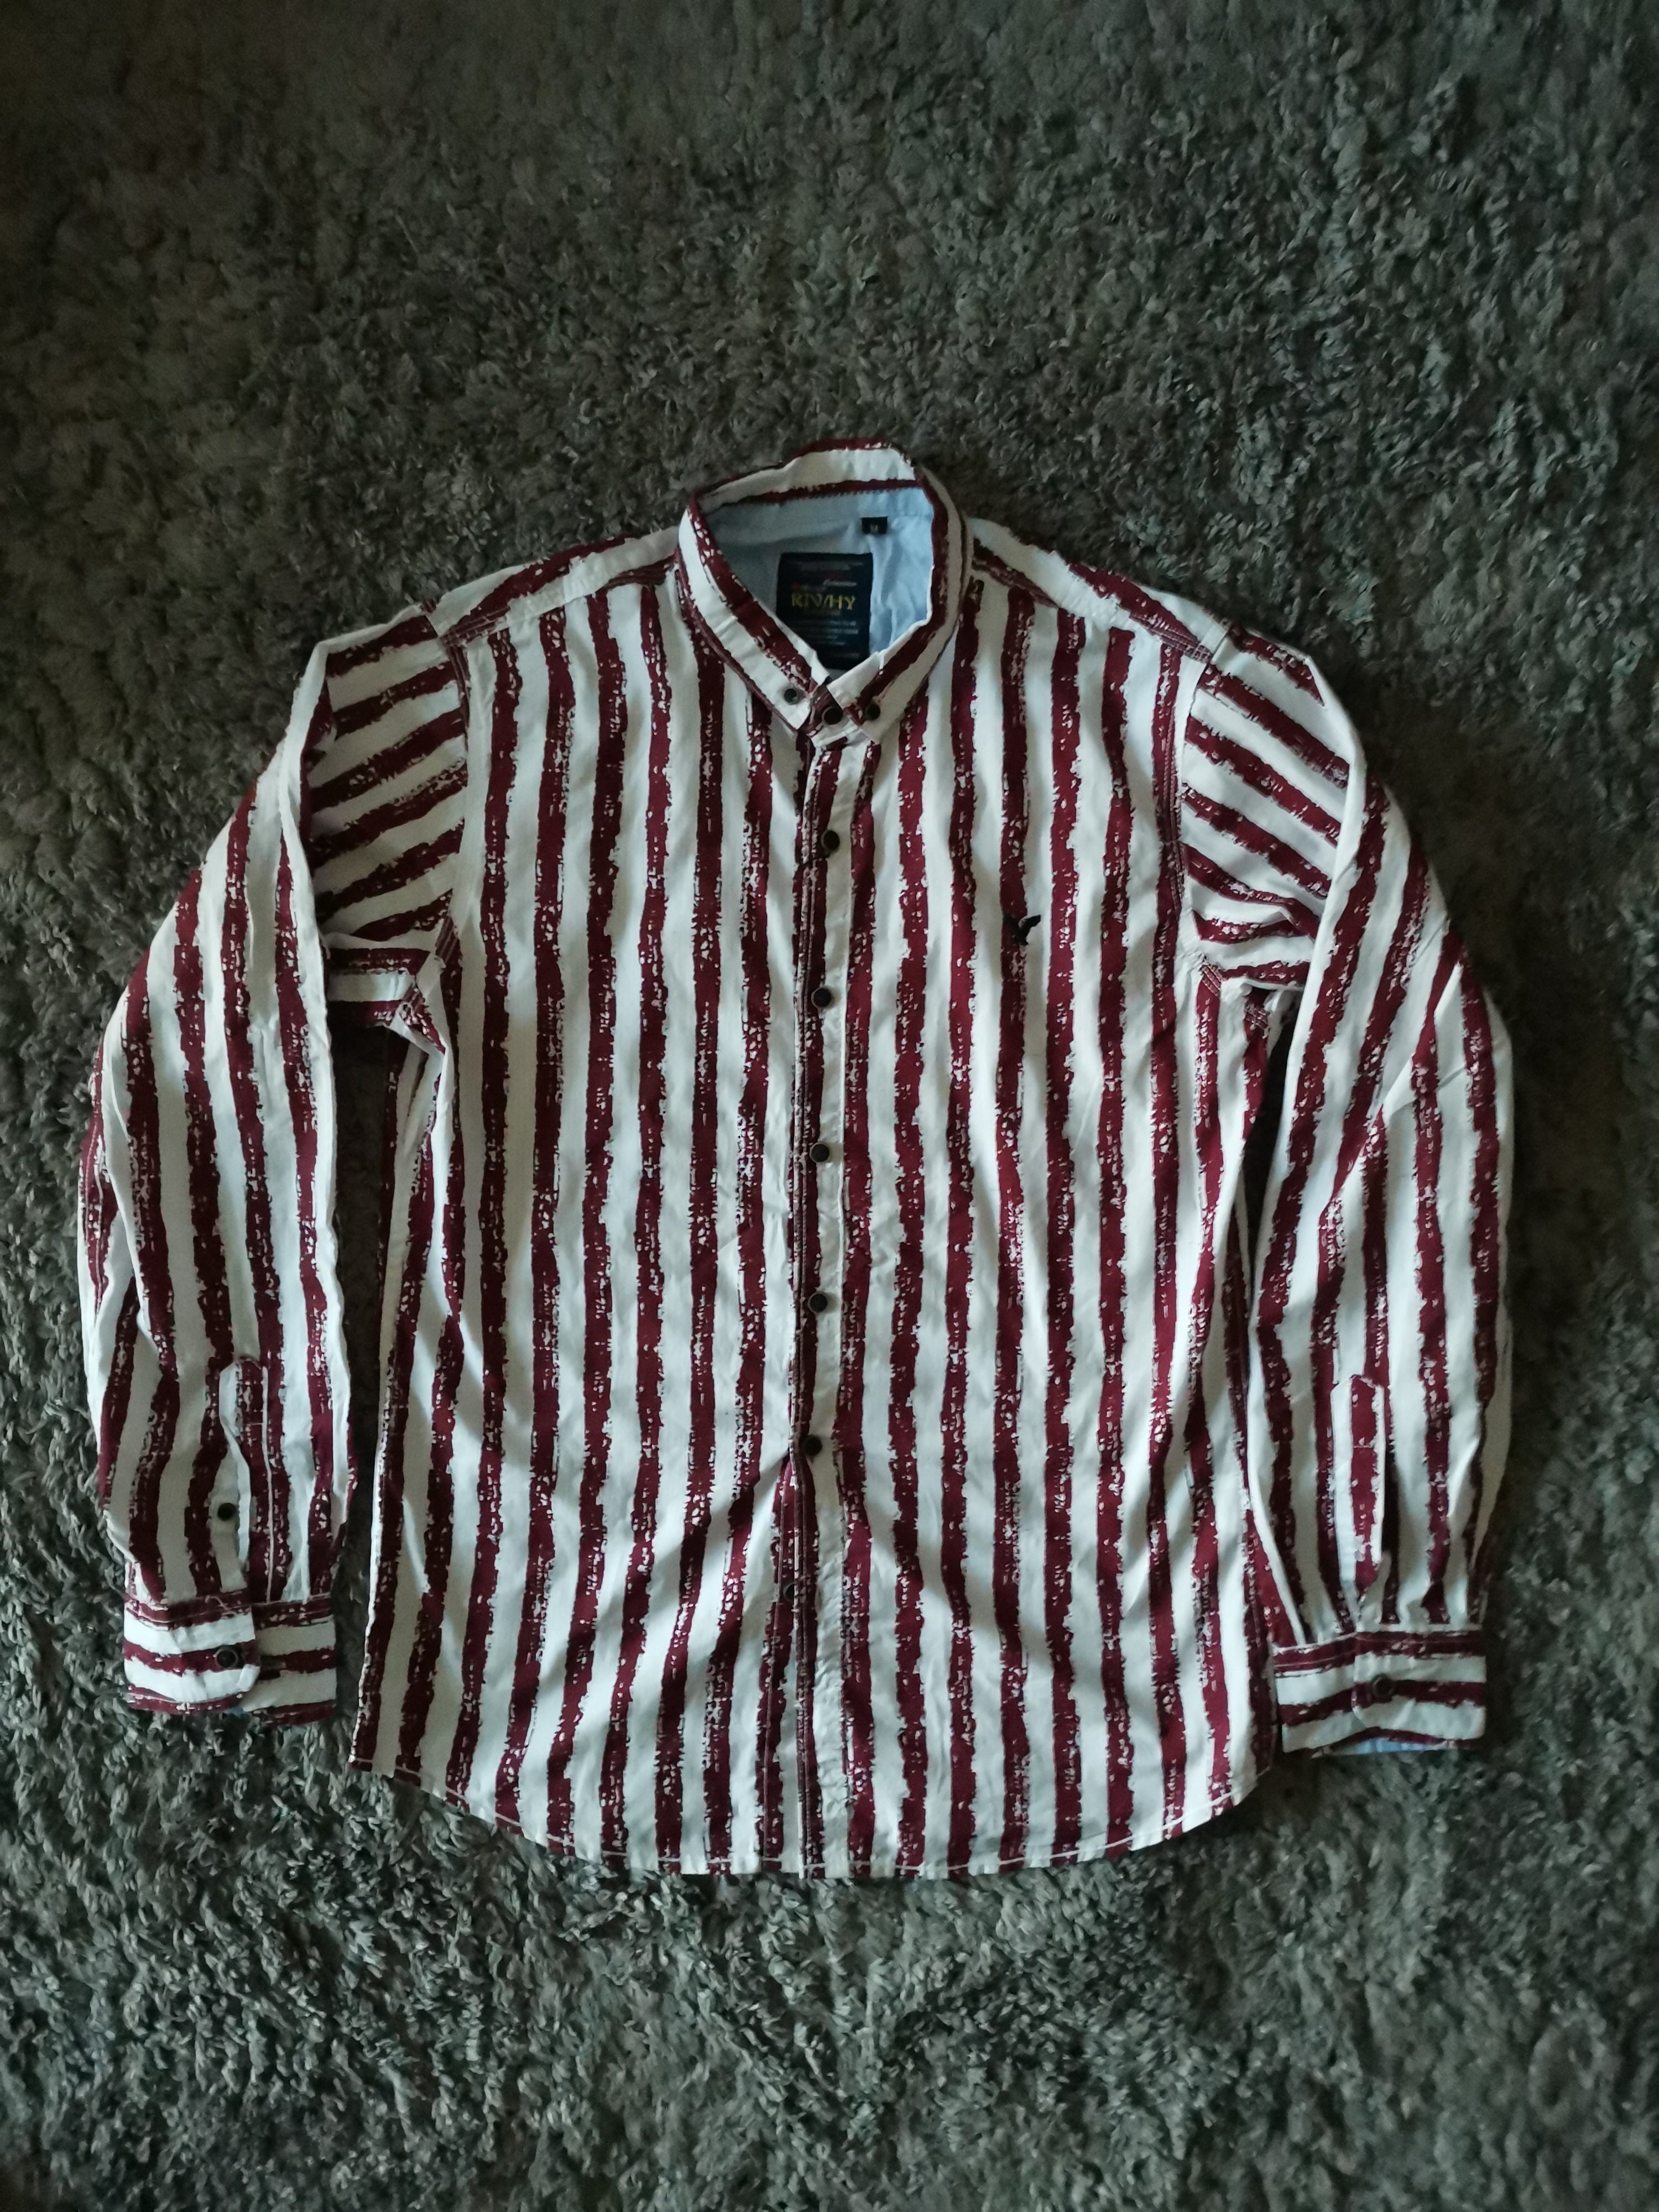 Stripe shirt